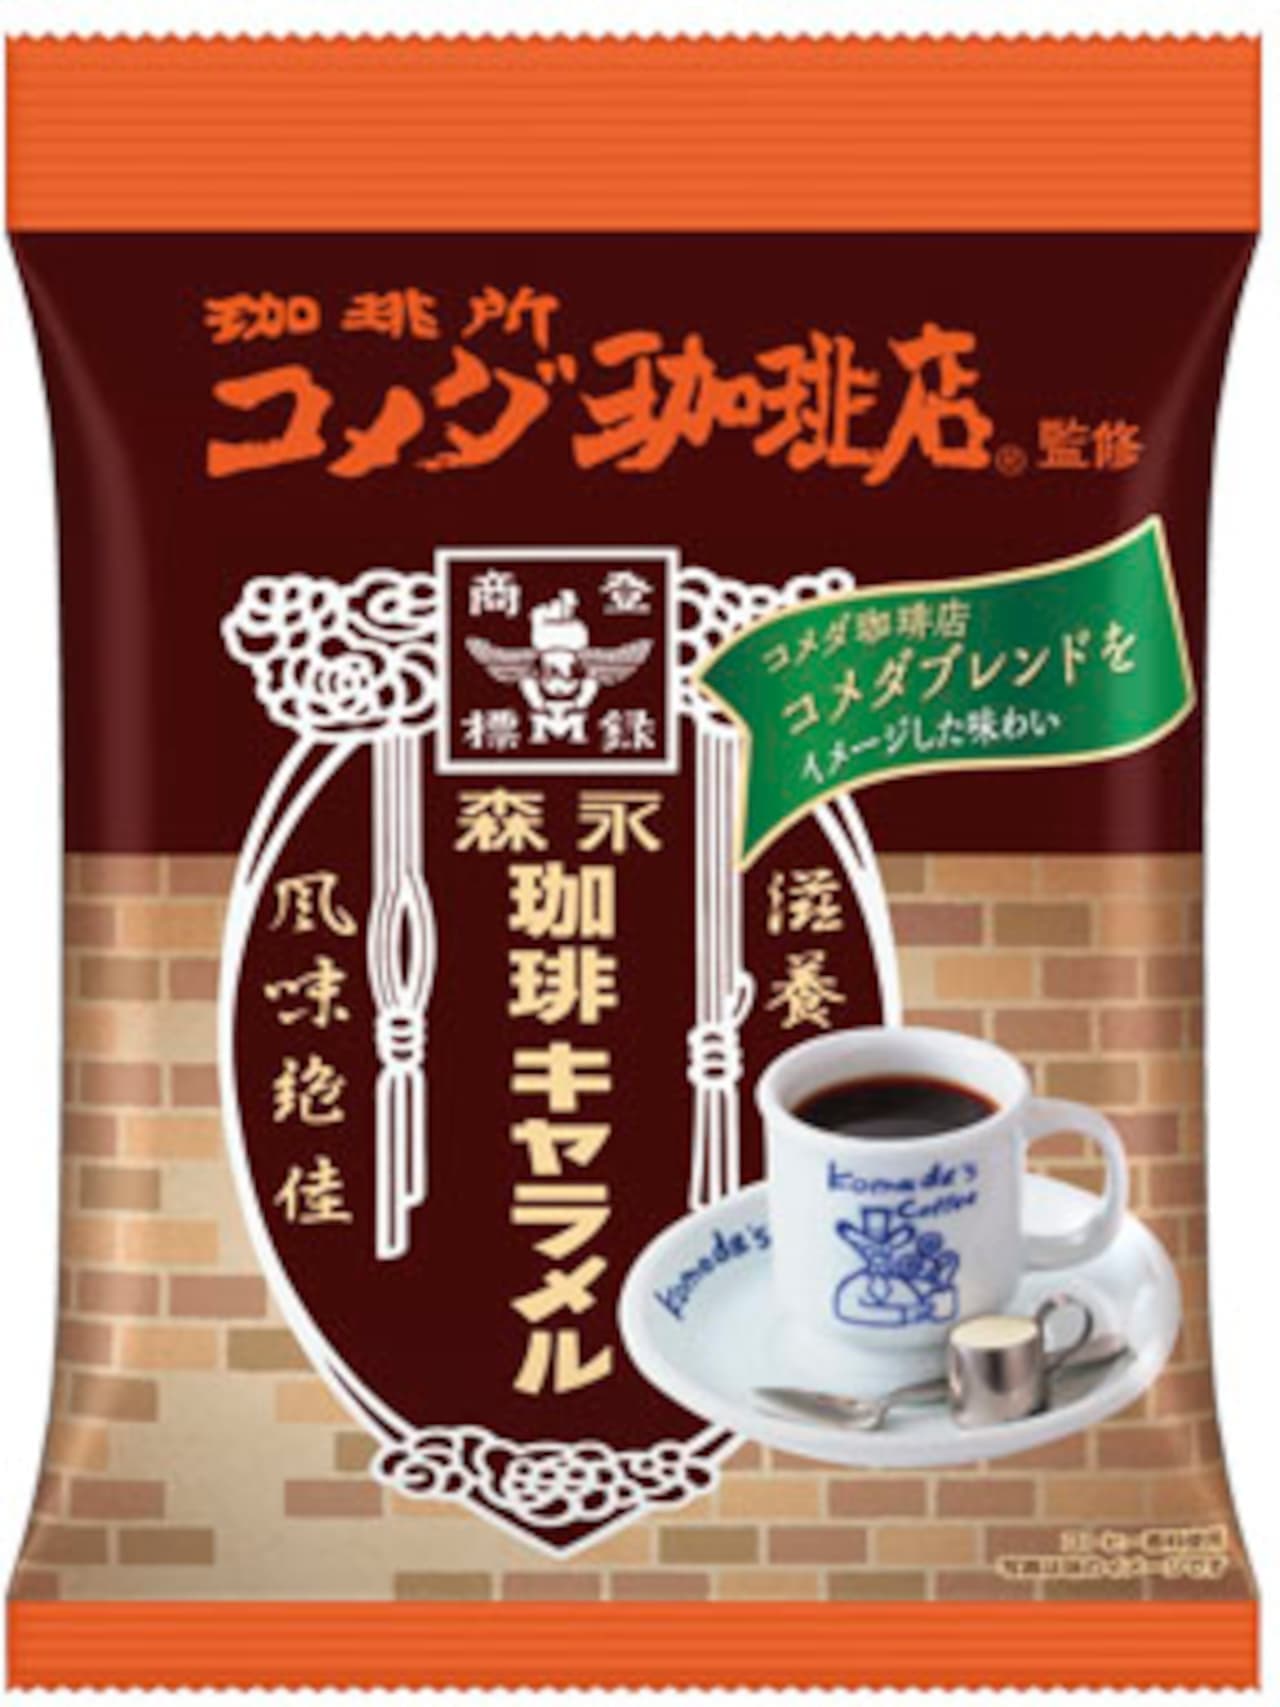 Morinaga Seika "Coffee Caramel [Comeda Coffee]".